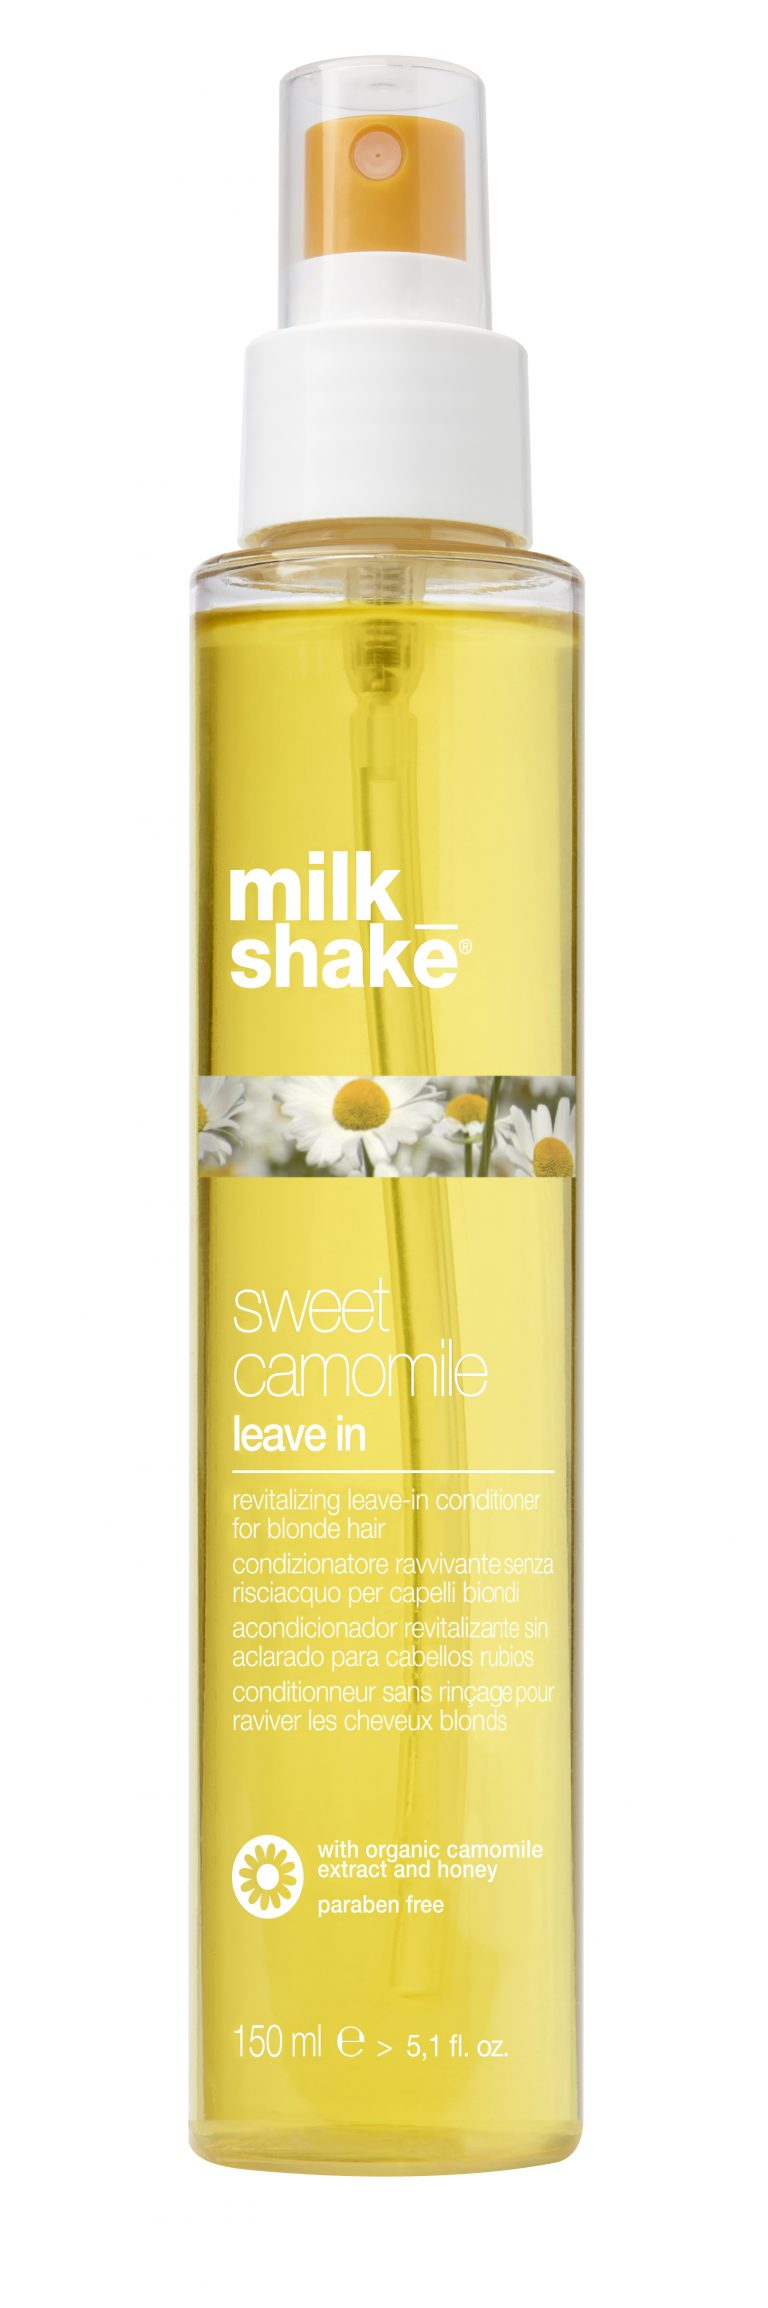 milk_shake sweet camomile leave in